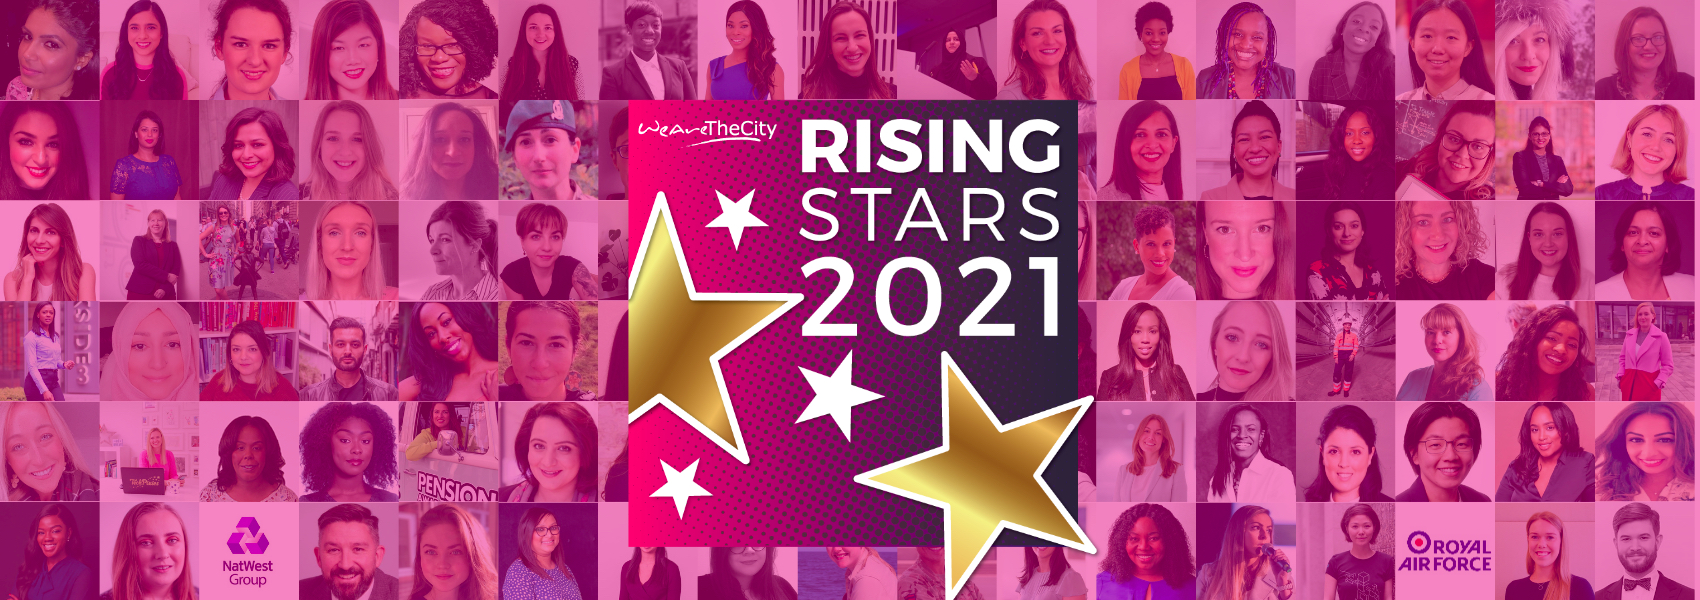 Rising Star Shortlist Banner 2